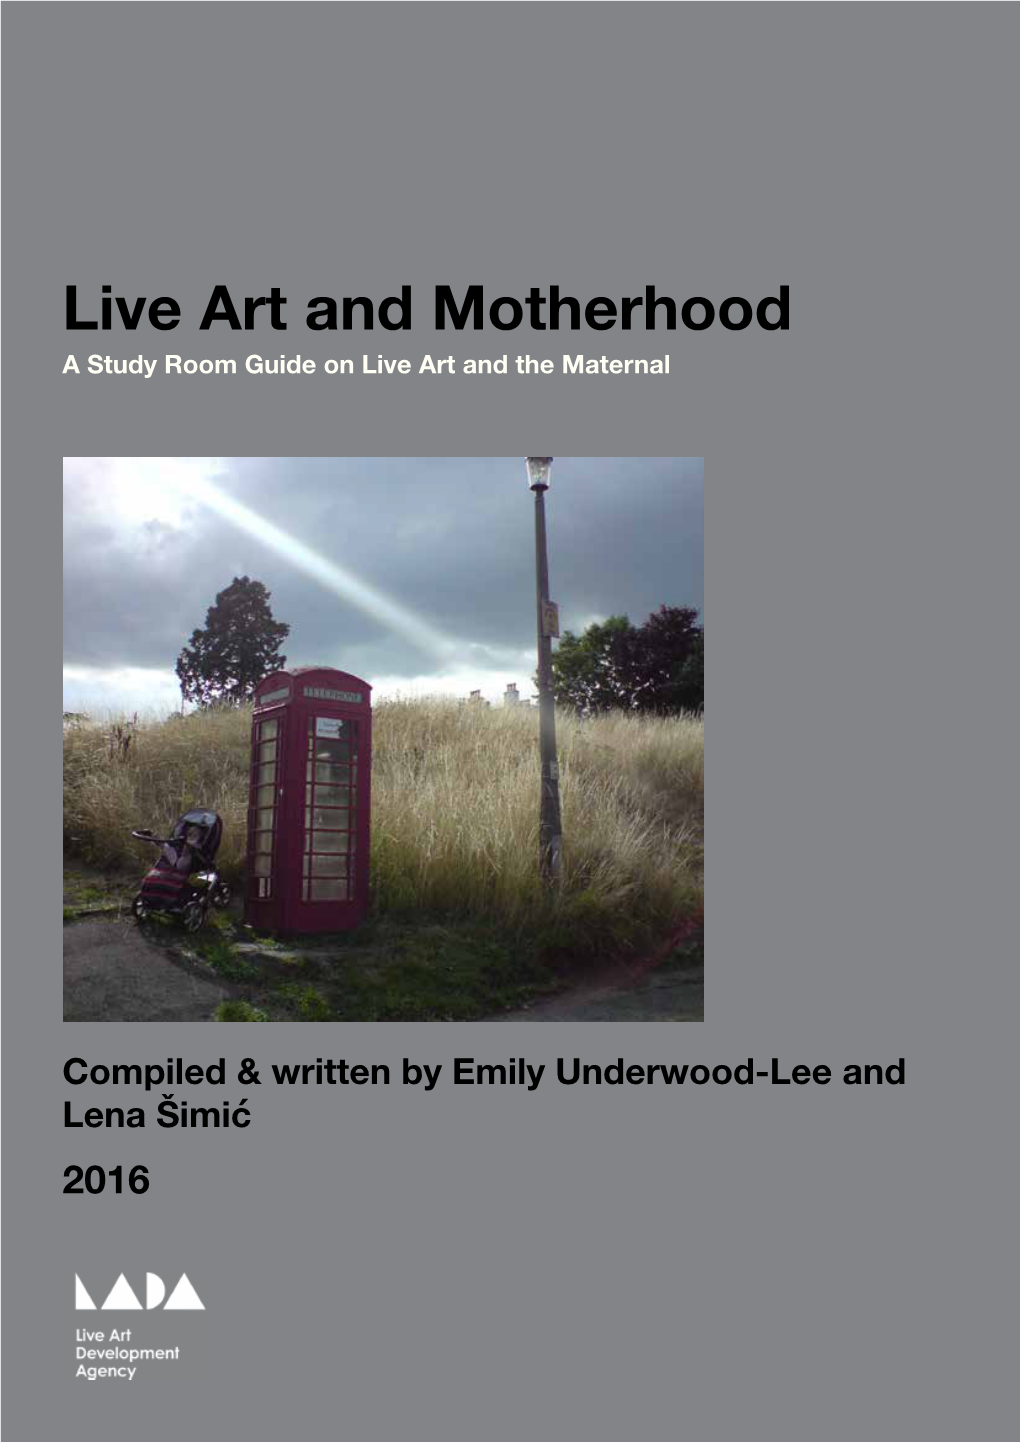 Study Room Guide on Live Art and Motherhood